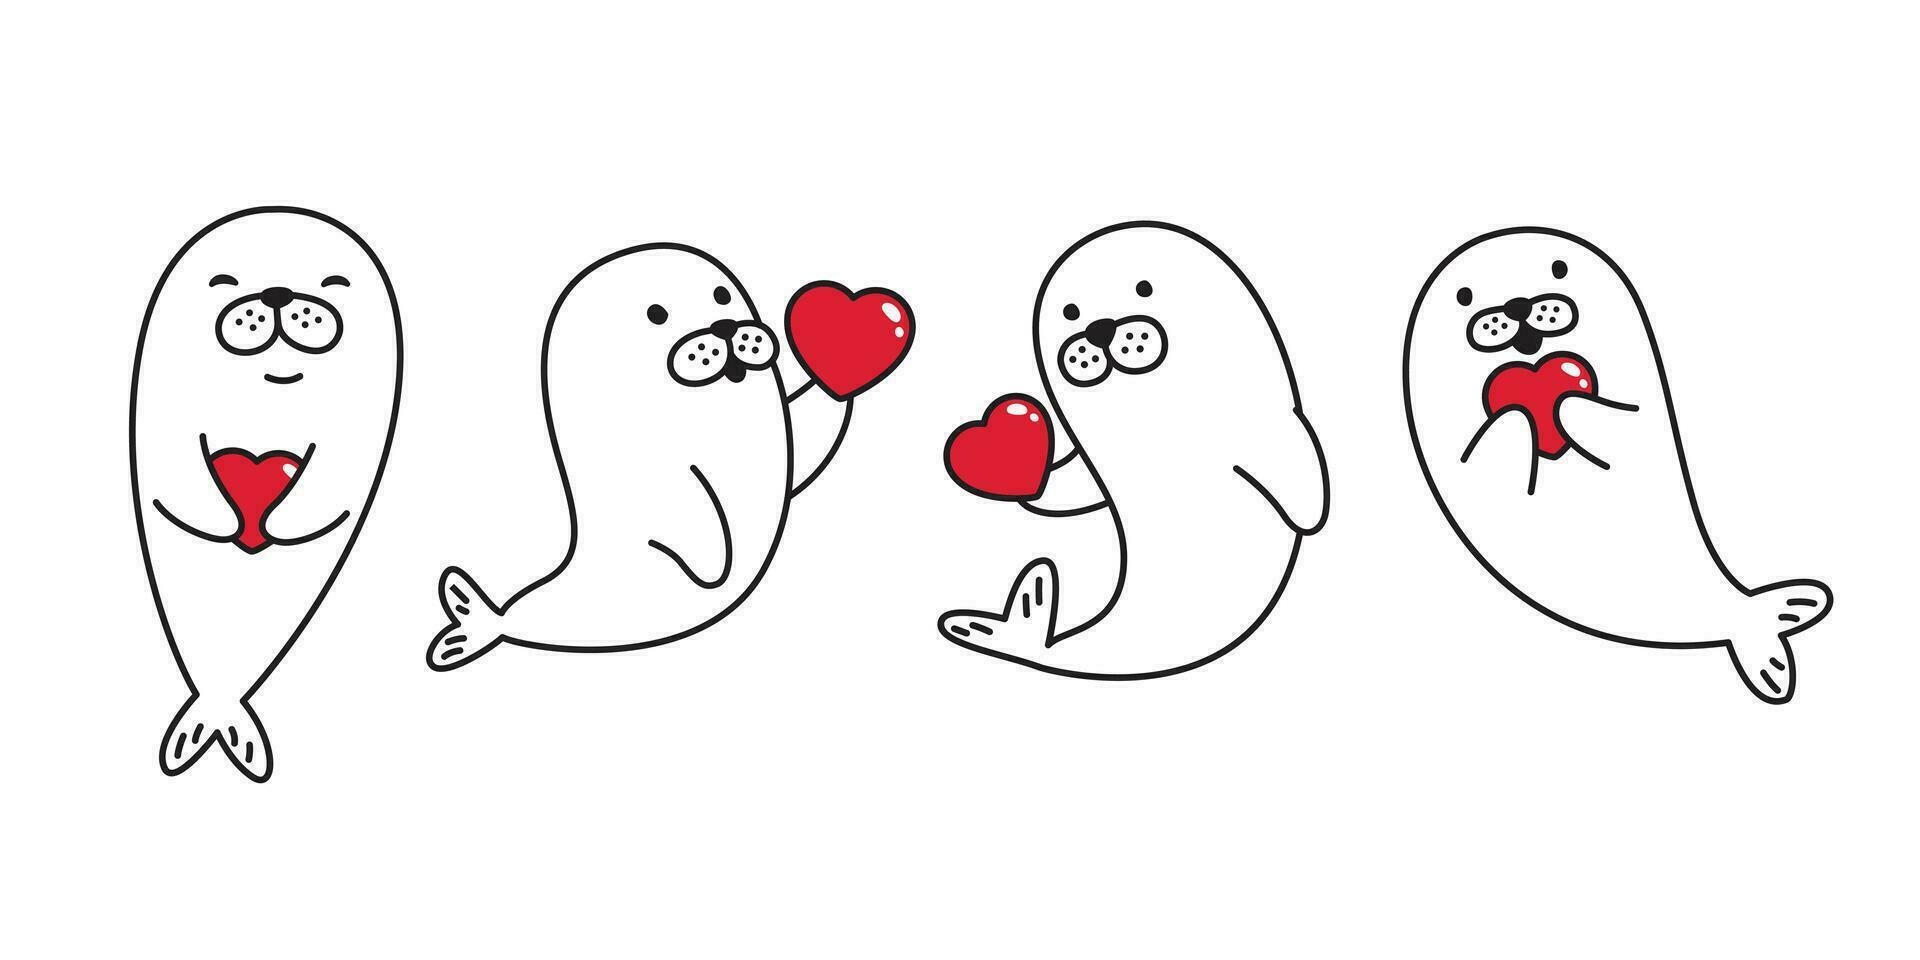 seal animal vector heart valentine cartoon character icon logo walrus sea lion bear polar bear illustration doodle